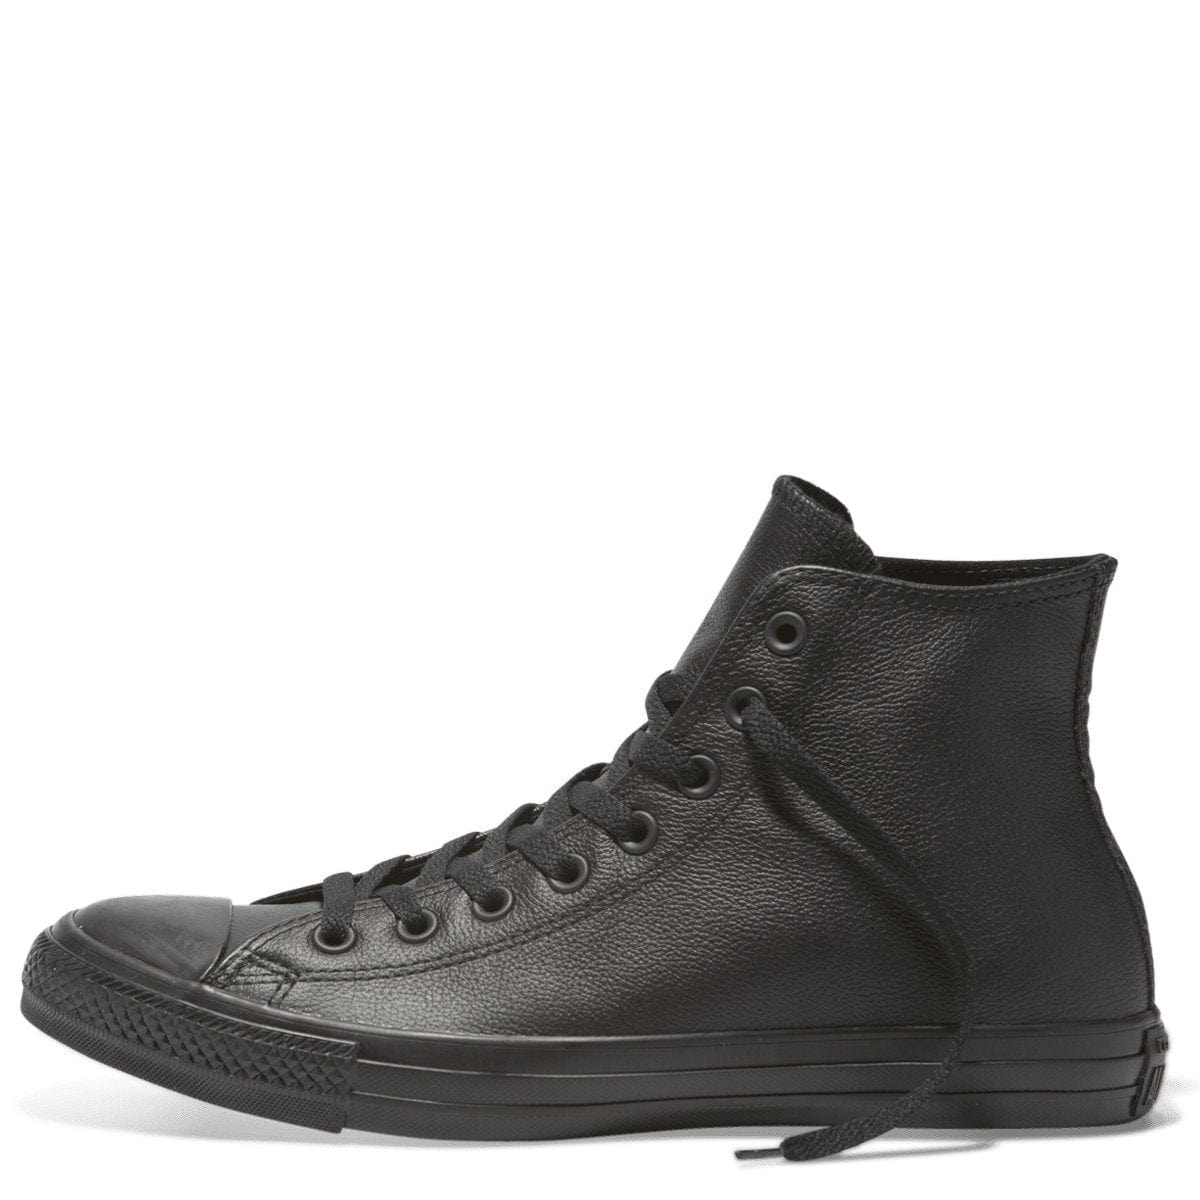 Converse High Leather Black Outlet | bellvalefarms.com